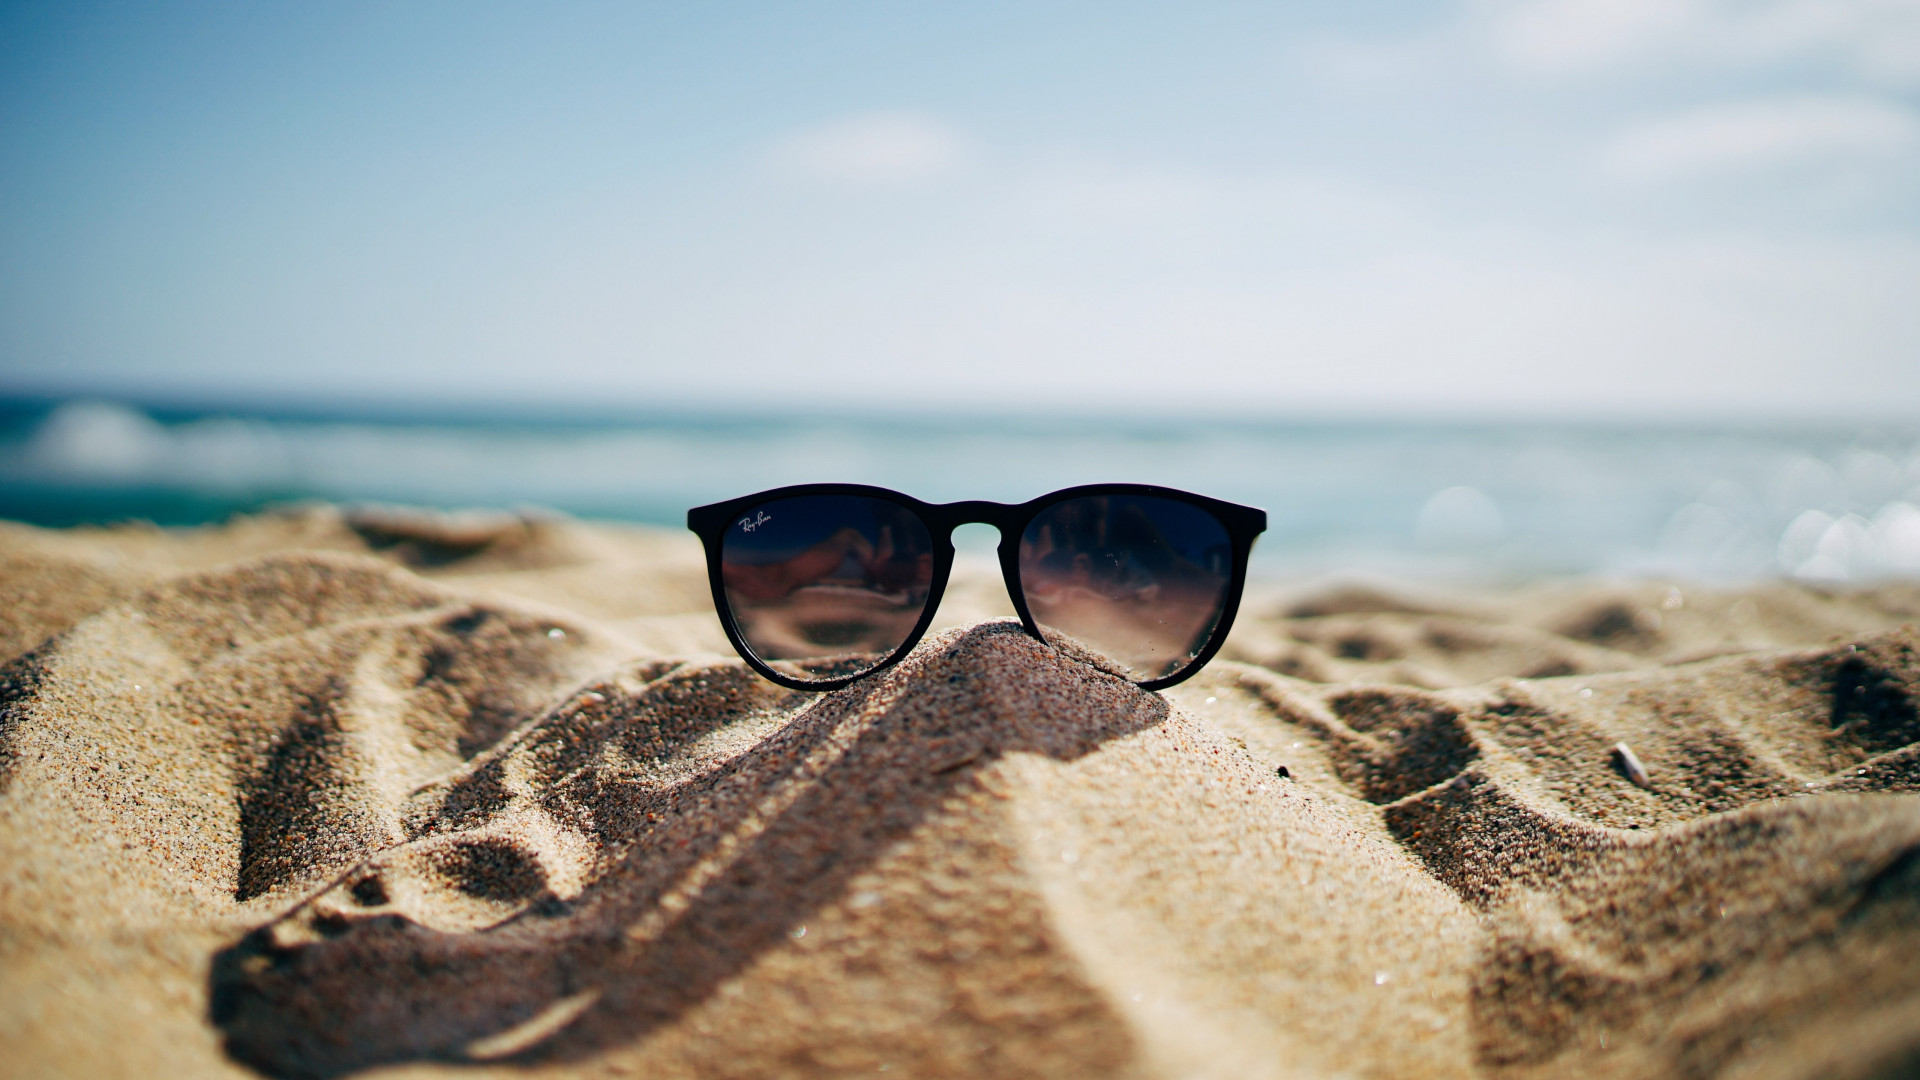 Ray Ban sunglasses on hot sand beach wallpaper 1920x1080